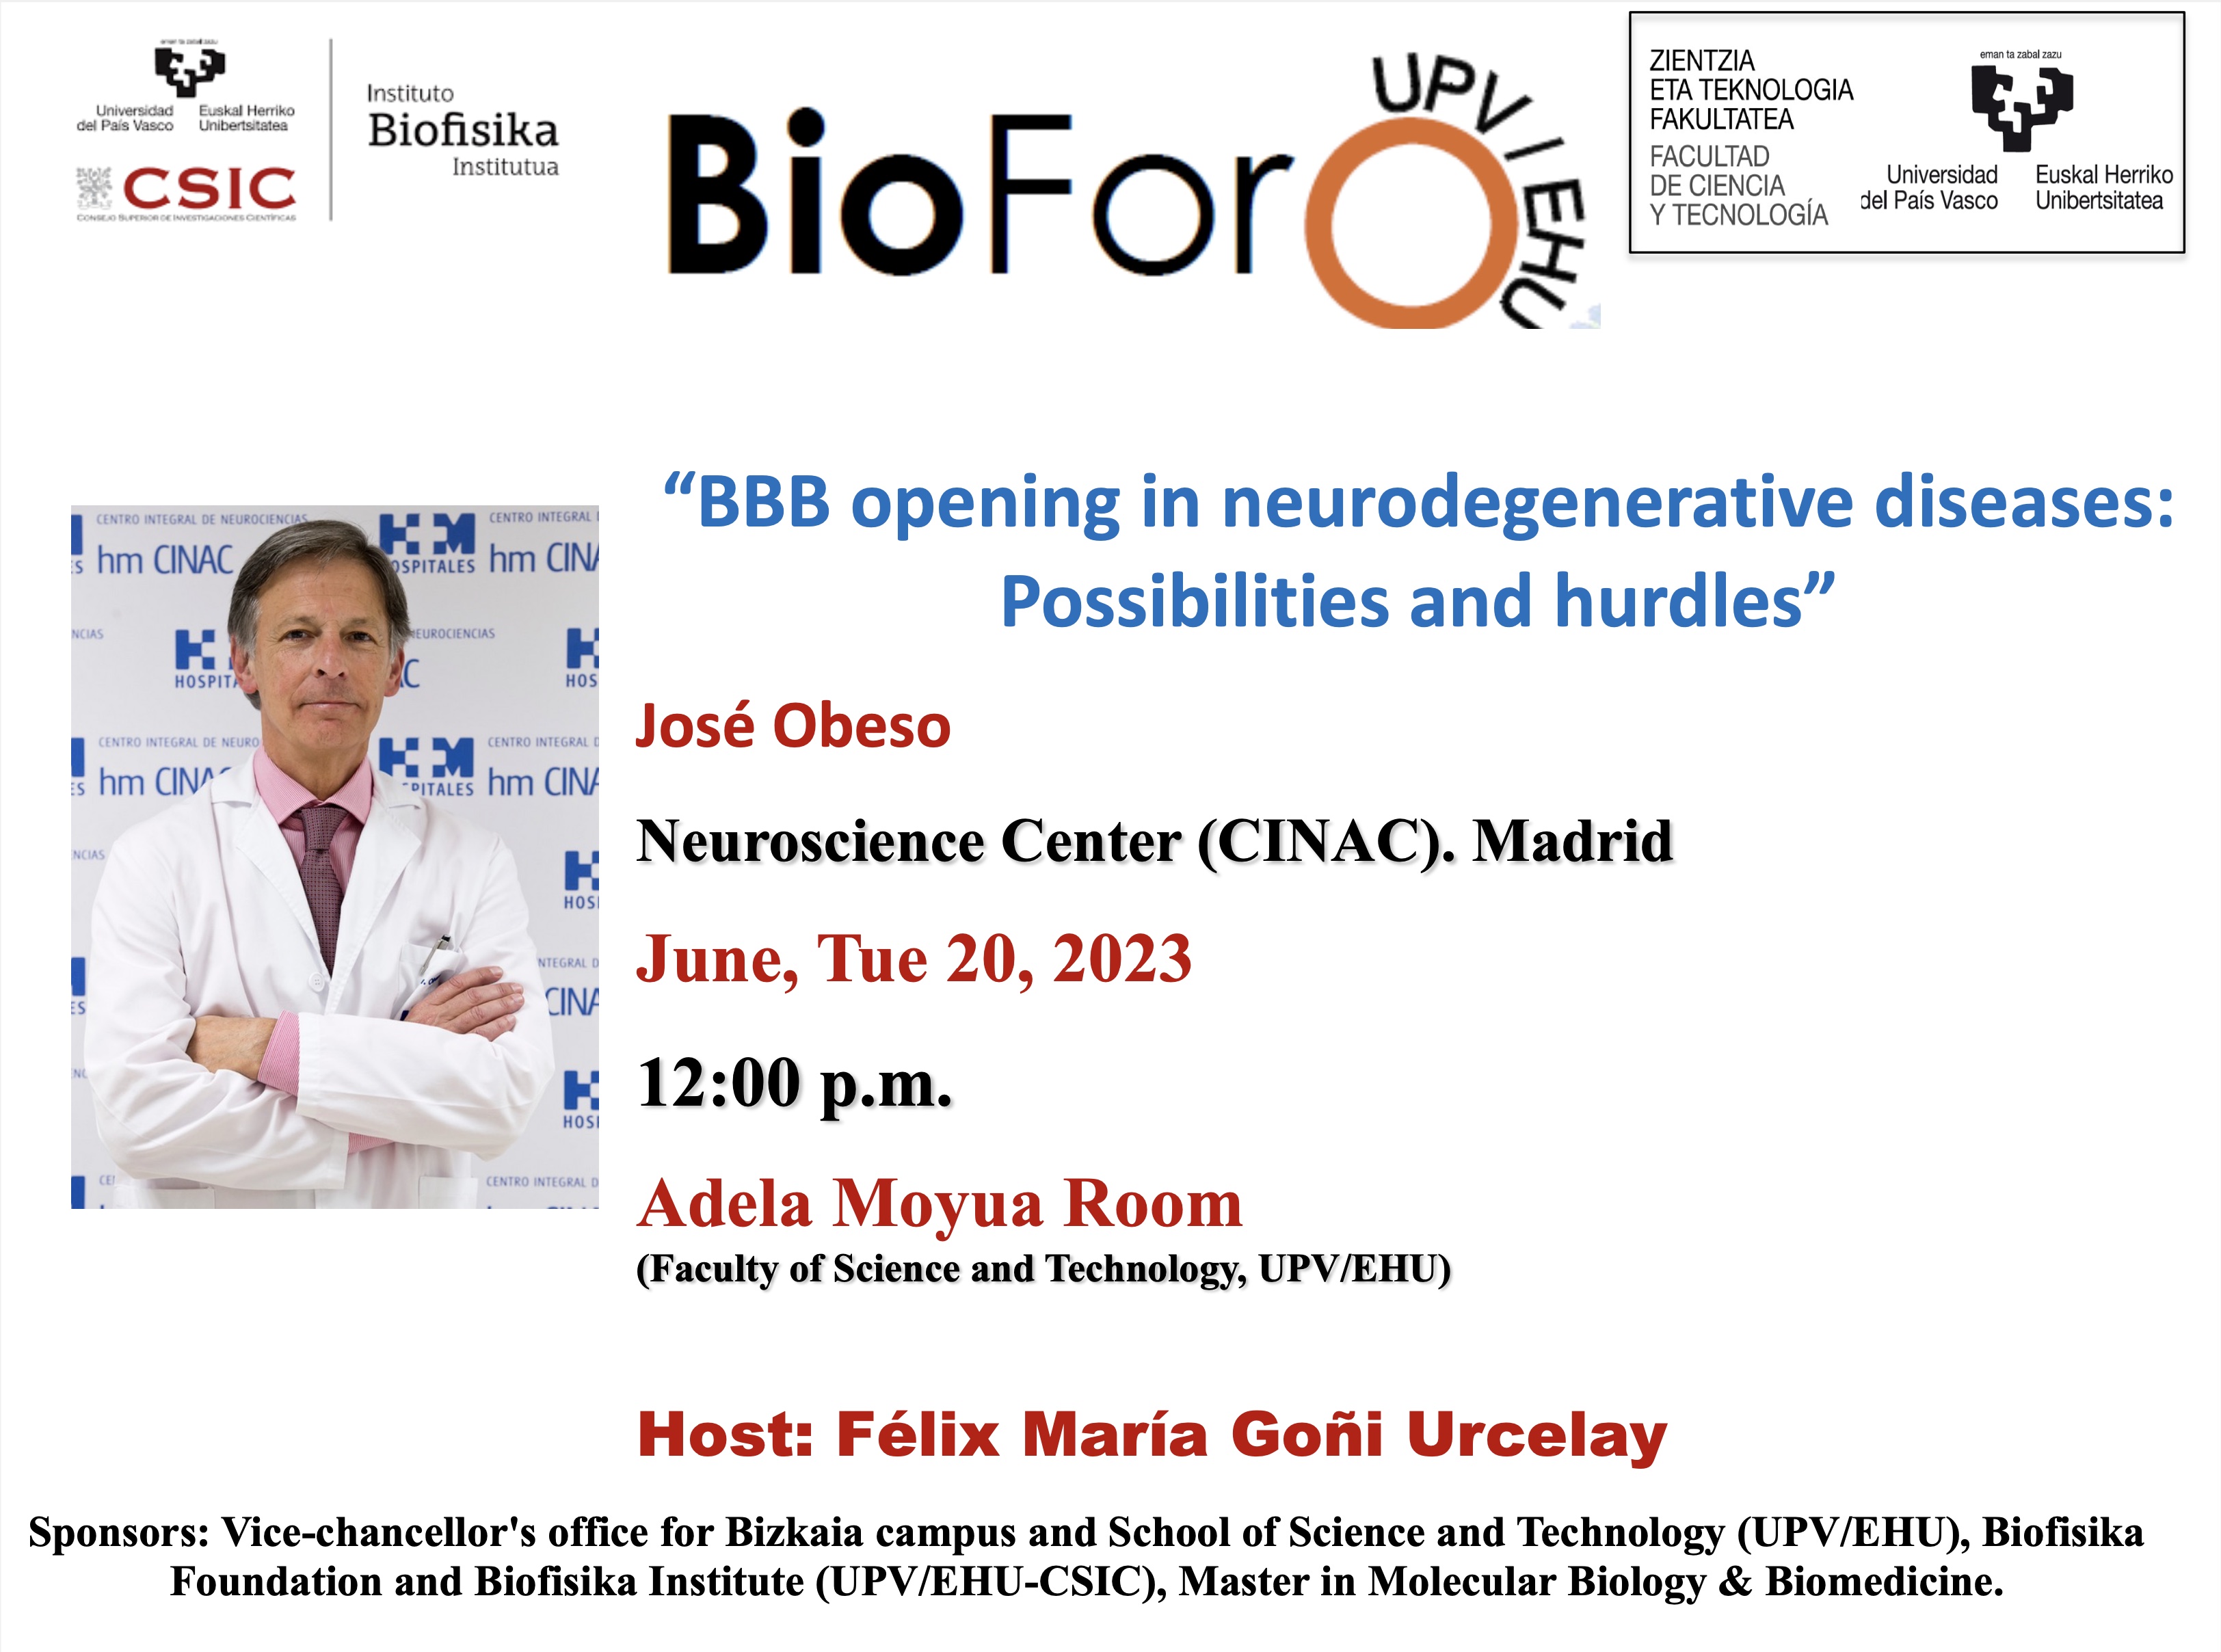 BioForo seminar: "BBB opening in neurodegenerative diseases: Possibilities and hurdles"